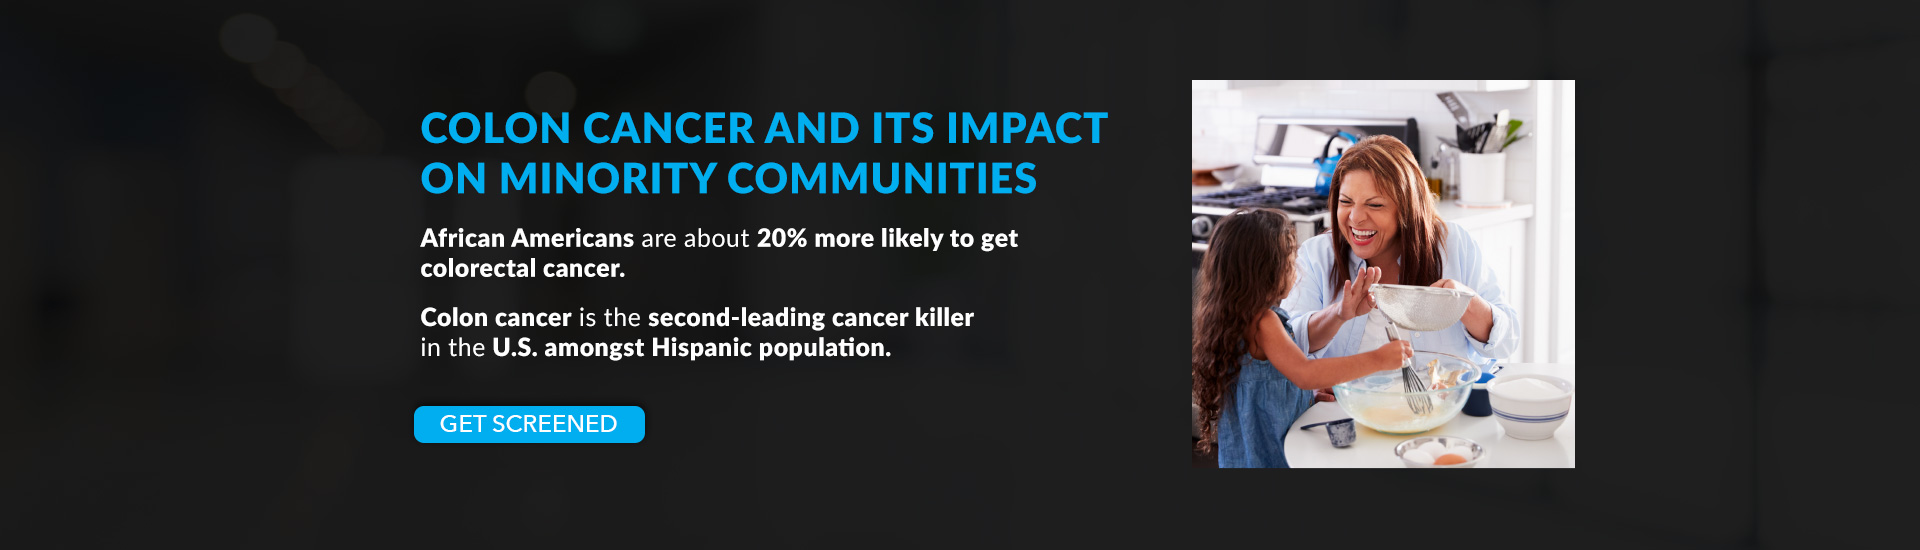 Colon Cancer Impact on Minority Communities